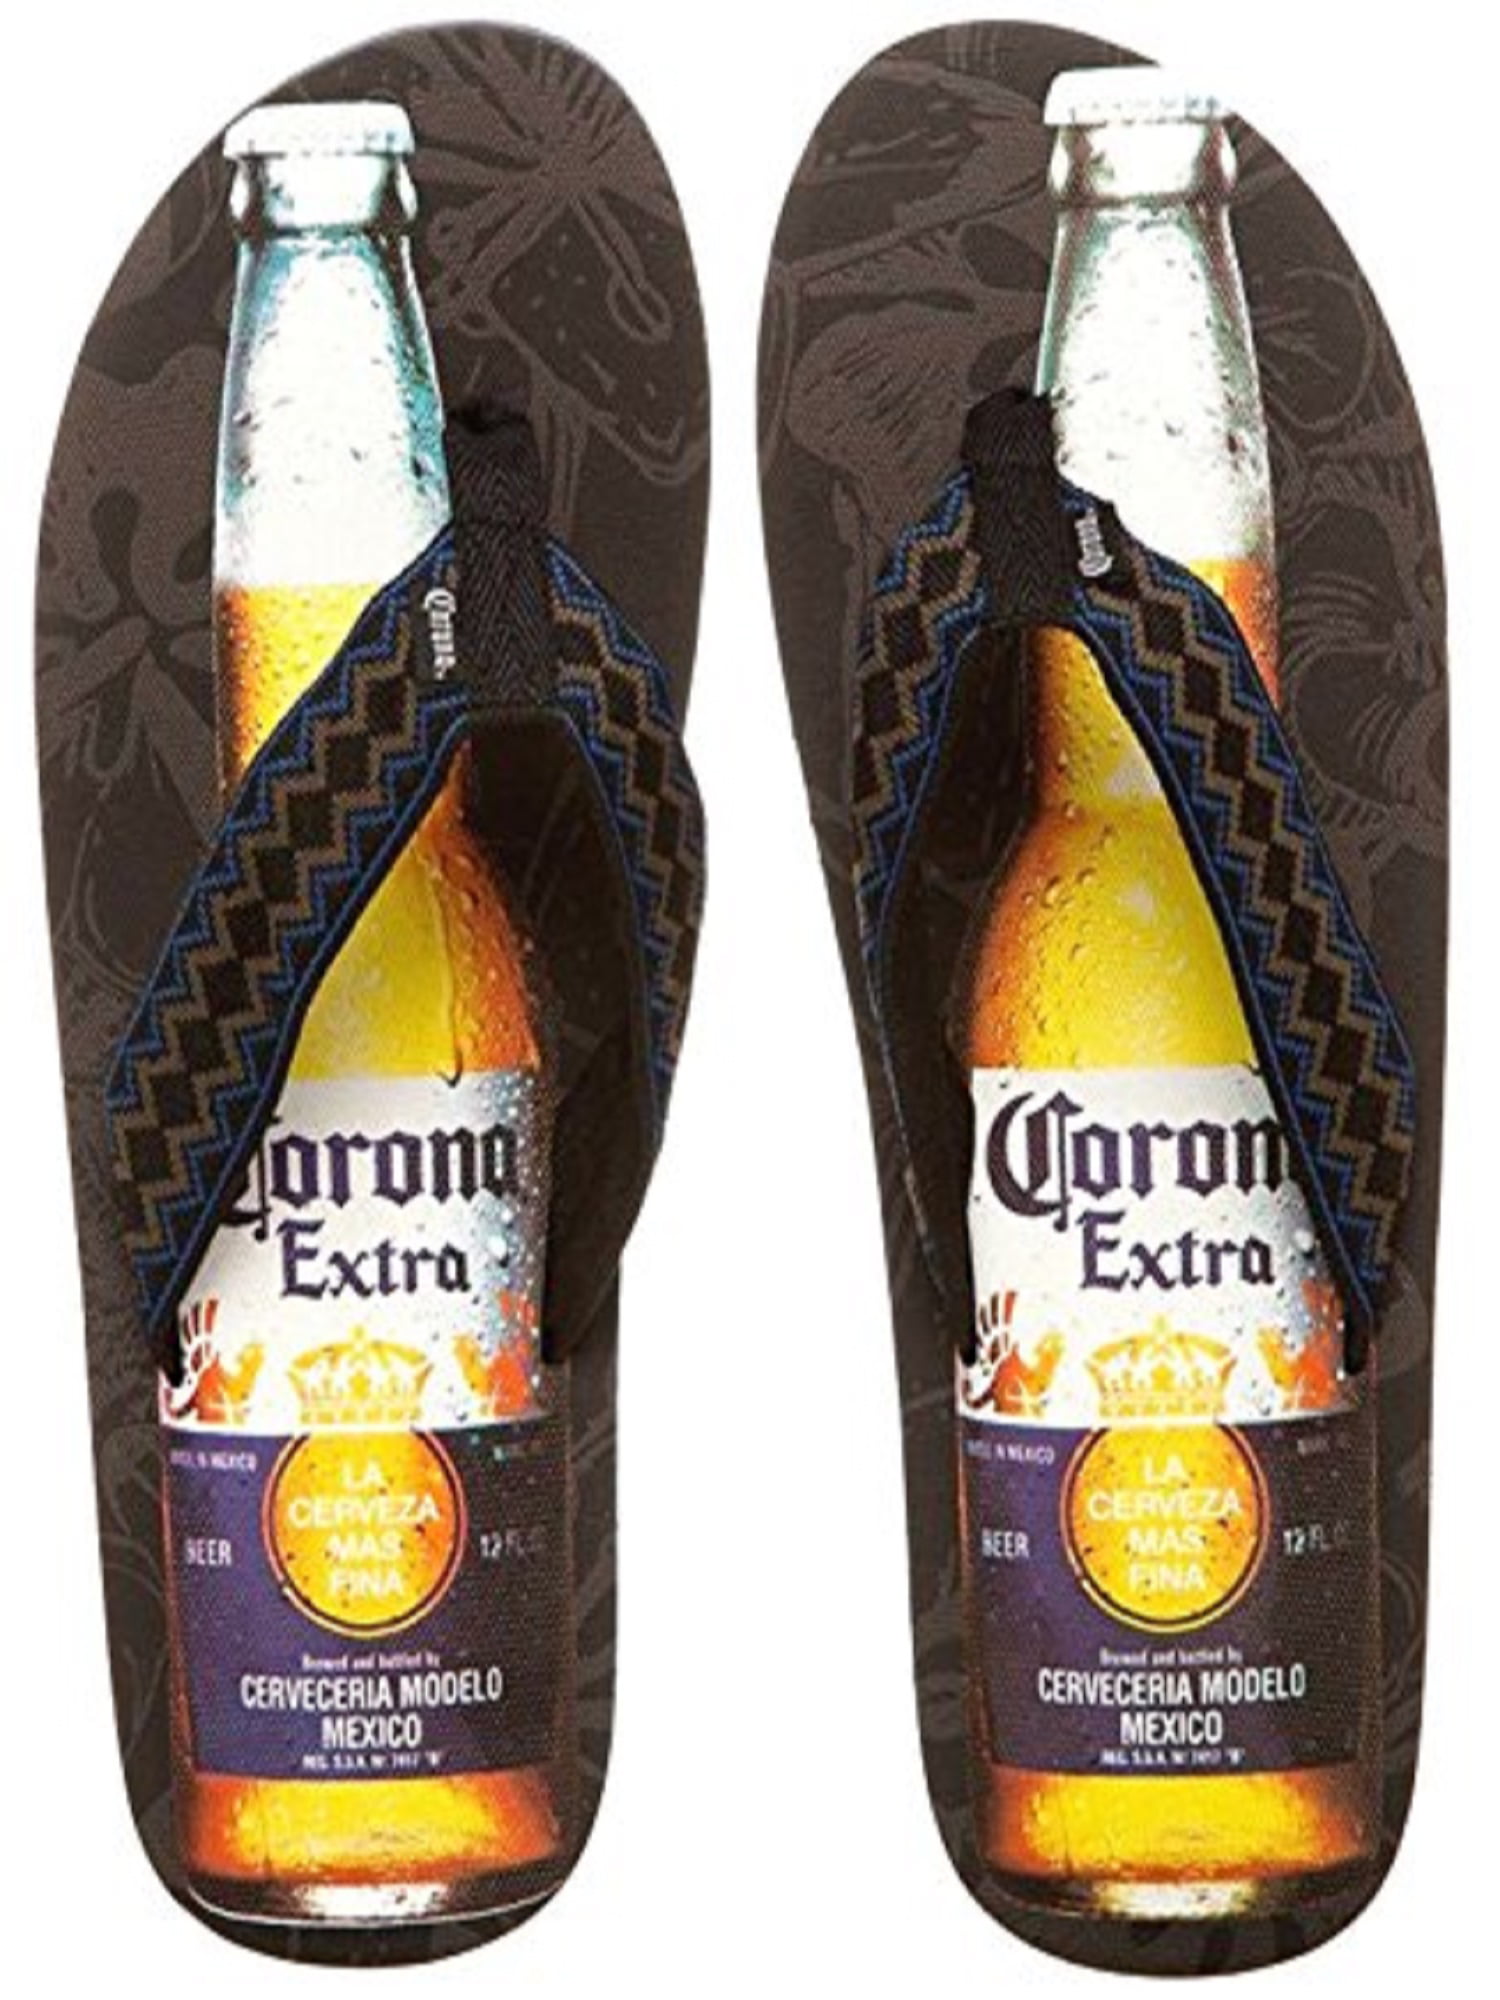 Corona Sandal Flip Flop Beer Bottle Cap Opener ~Metal ~Magnet~ New in Pack 